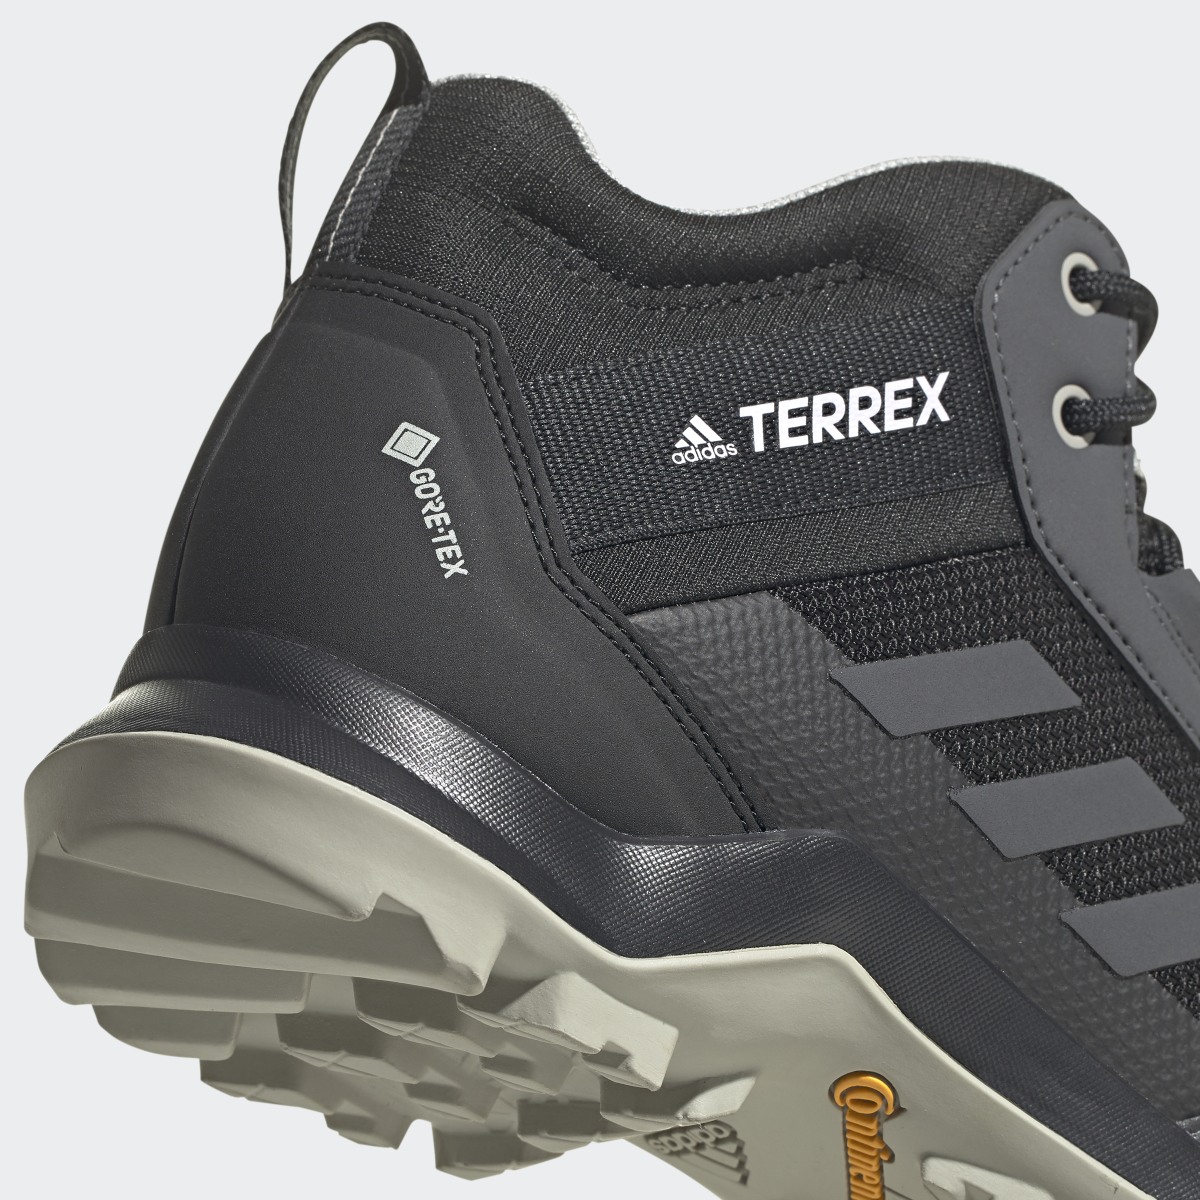 Adidas Terrex AX3 Mid GORE-TEX Hiking Shoes. 15